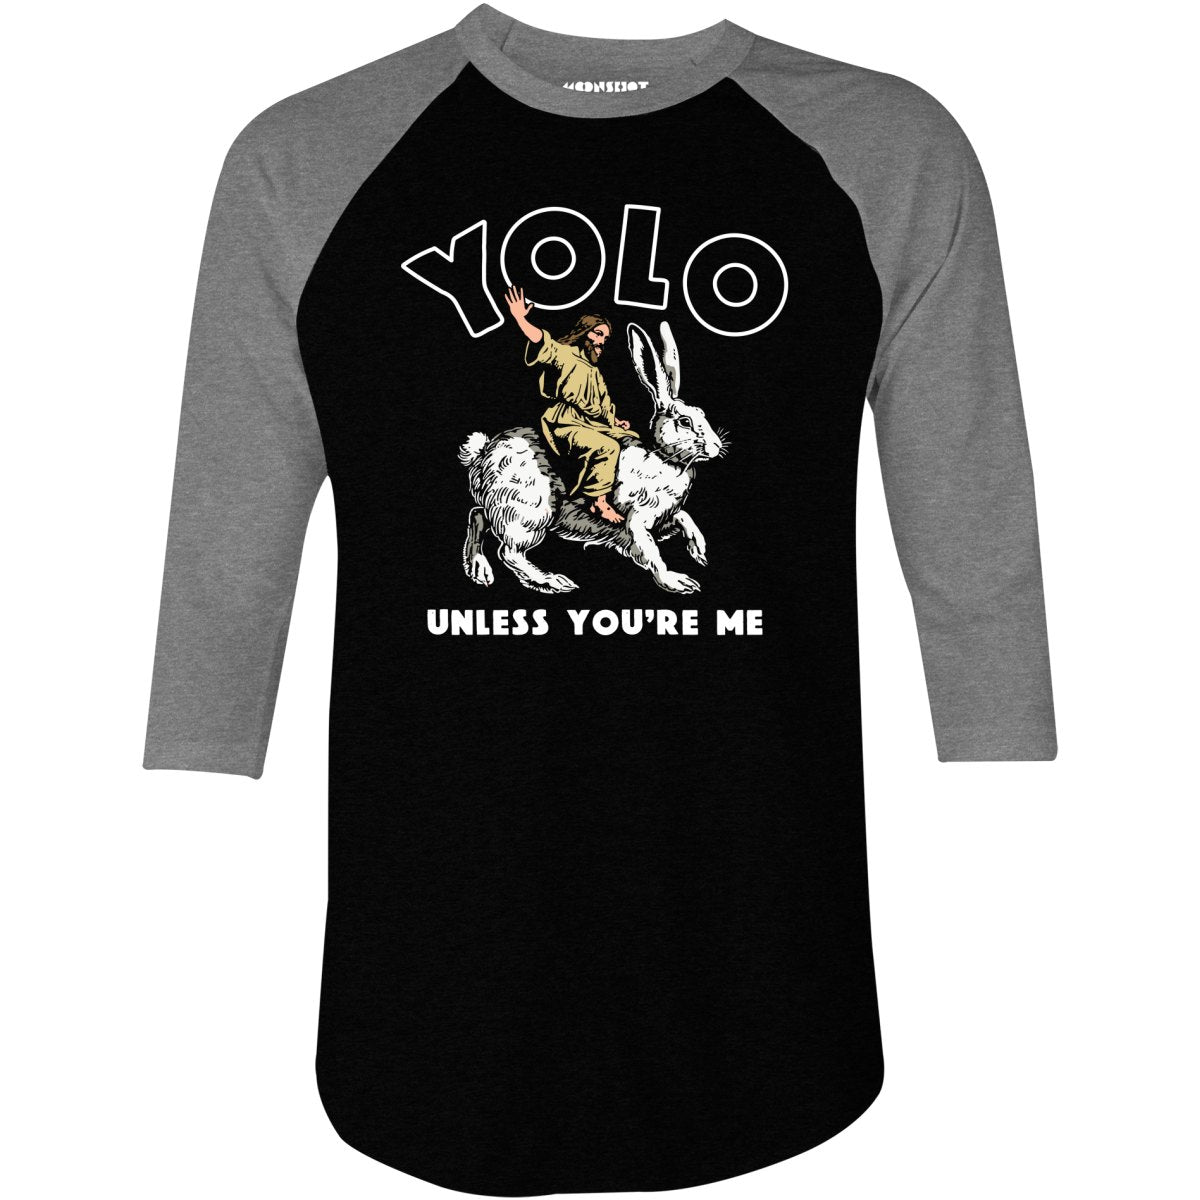 Yolo - Unless You're Me - 3/4 Sleeve Raglan T-Shirt